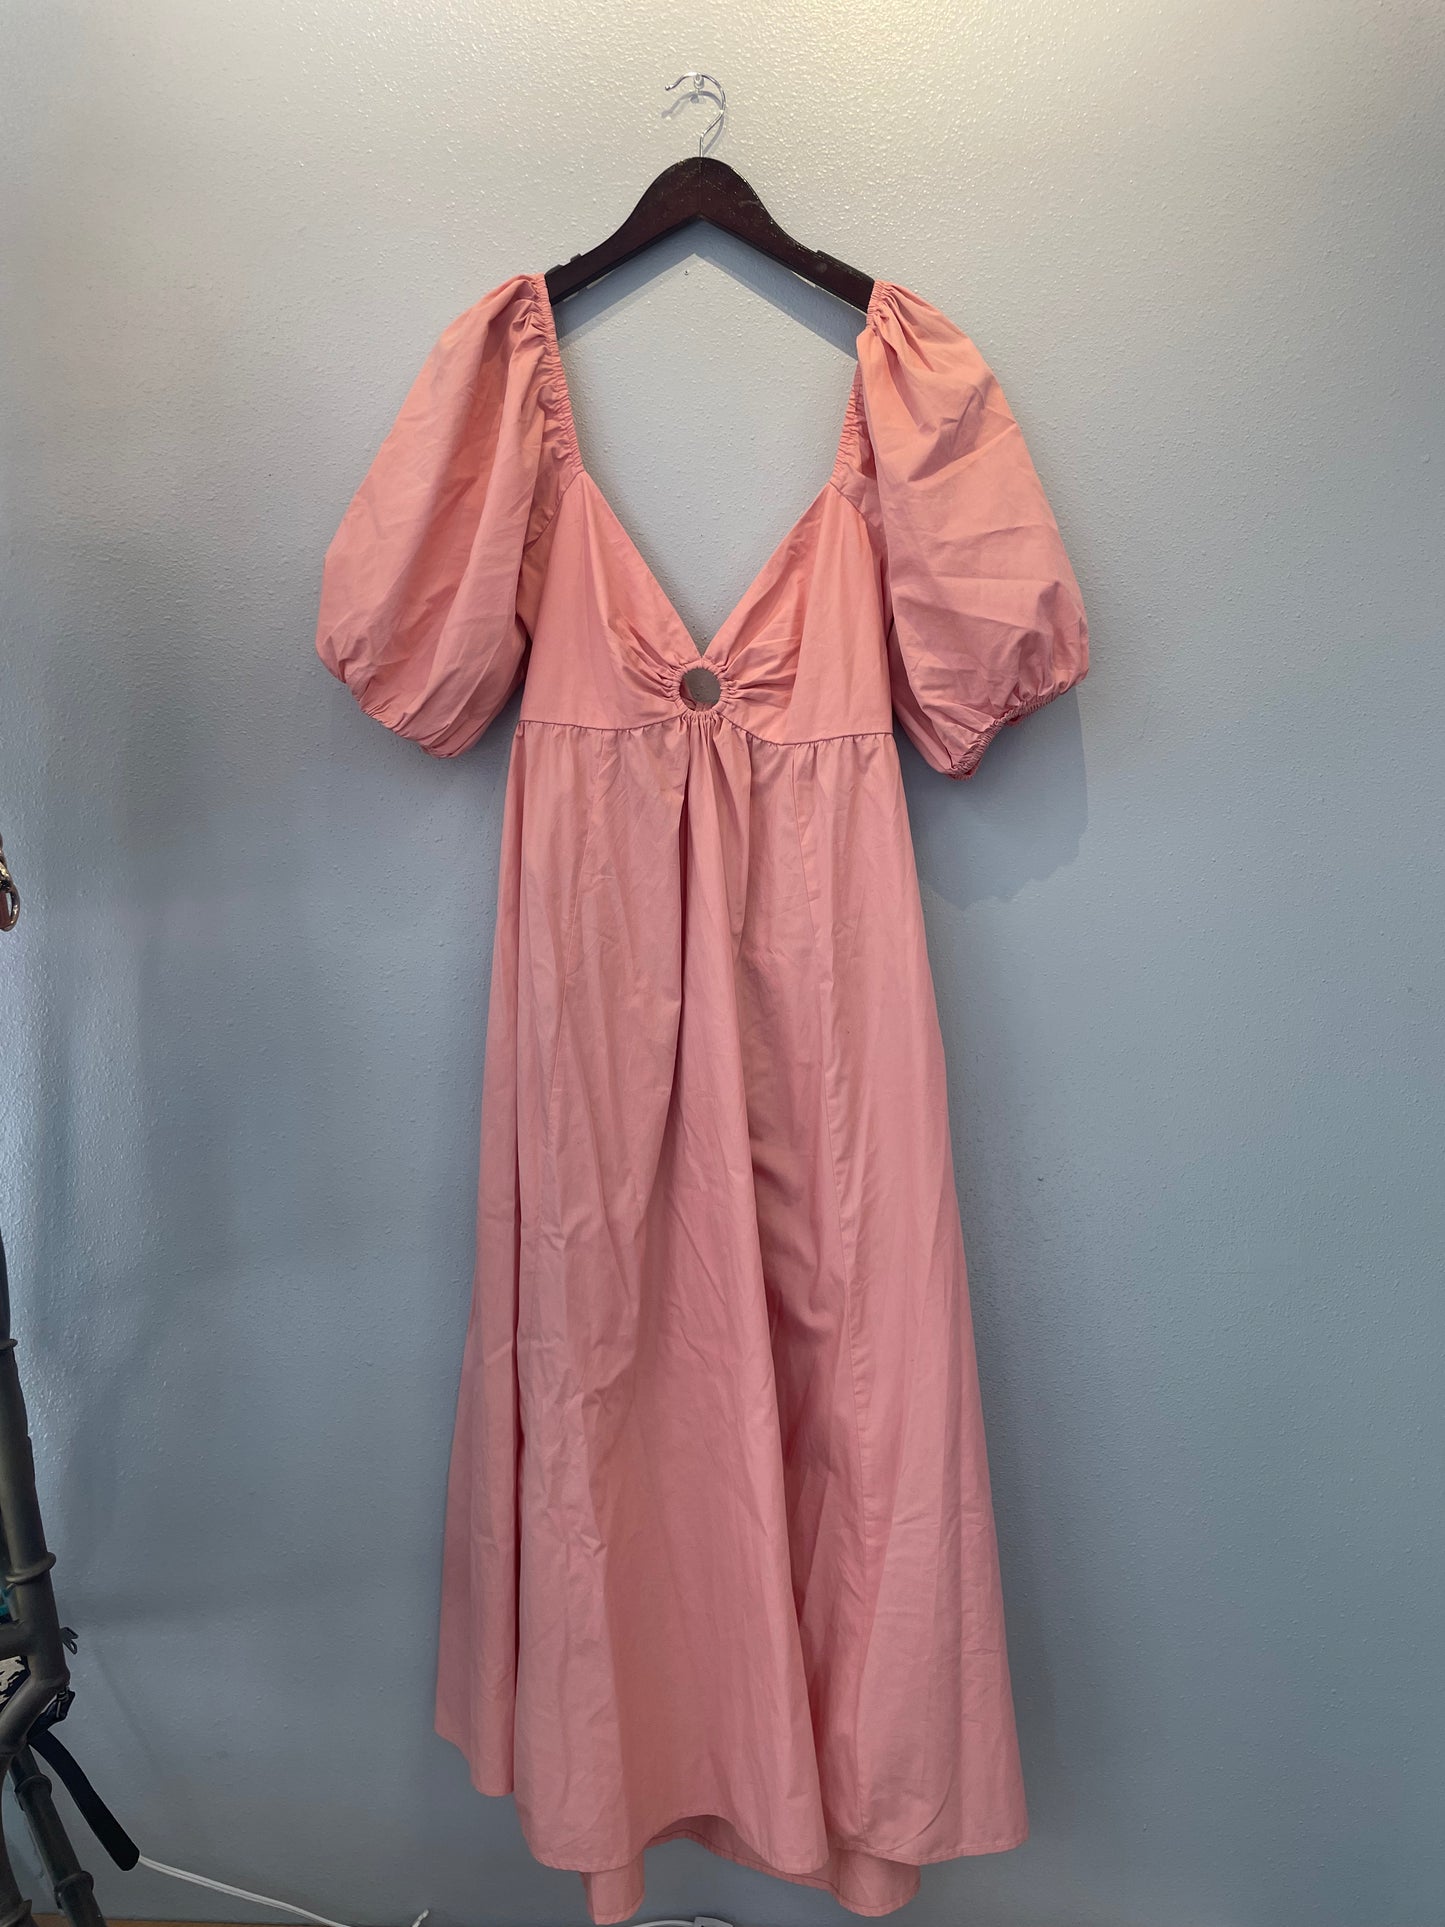 Abercrombie & Fitch "Oring Puff Sleeve" Midi Dress